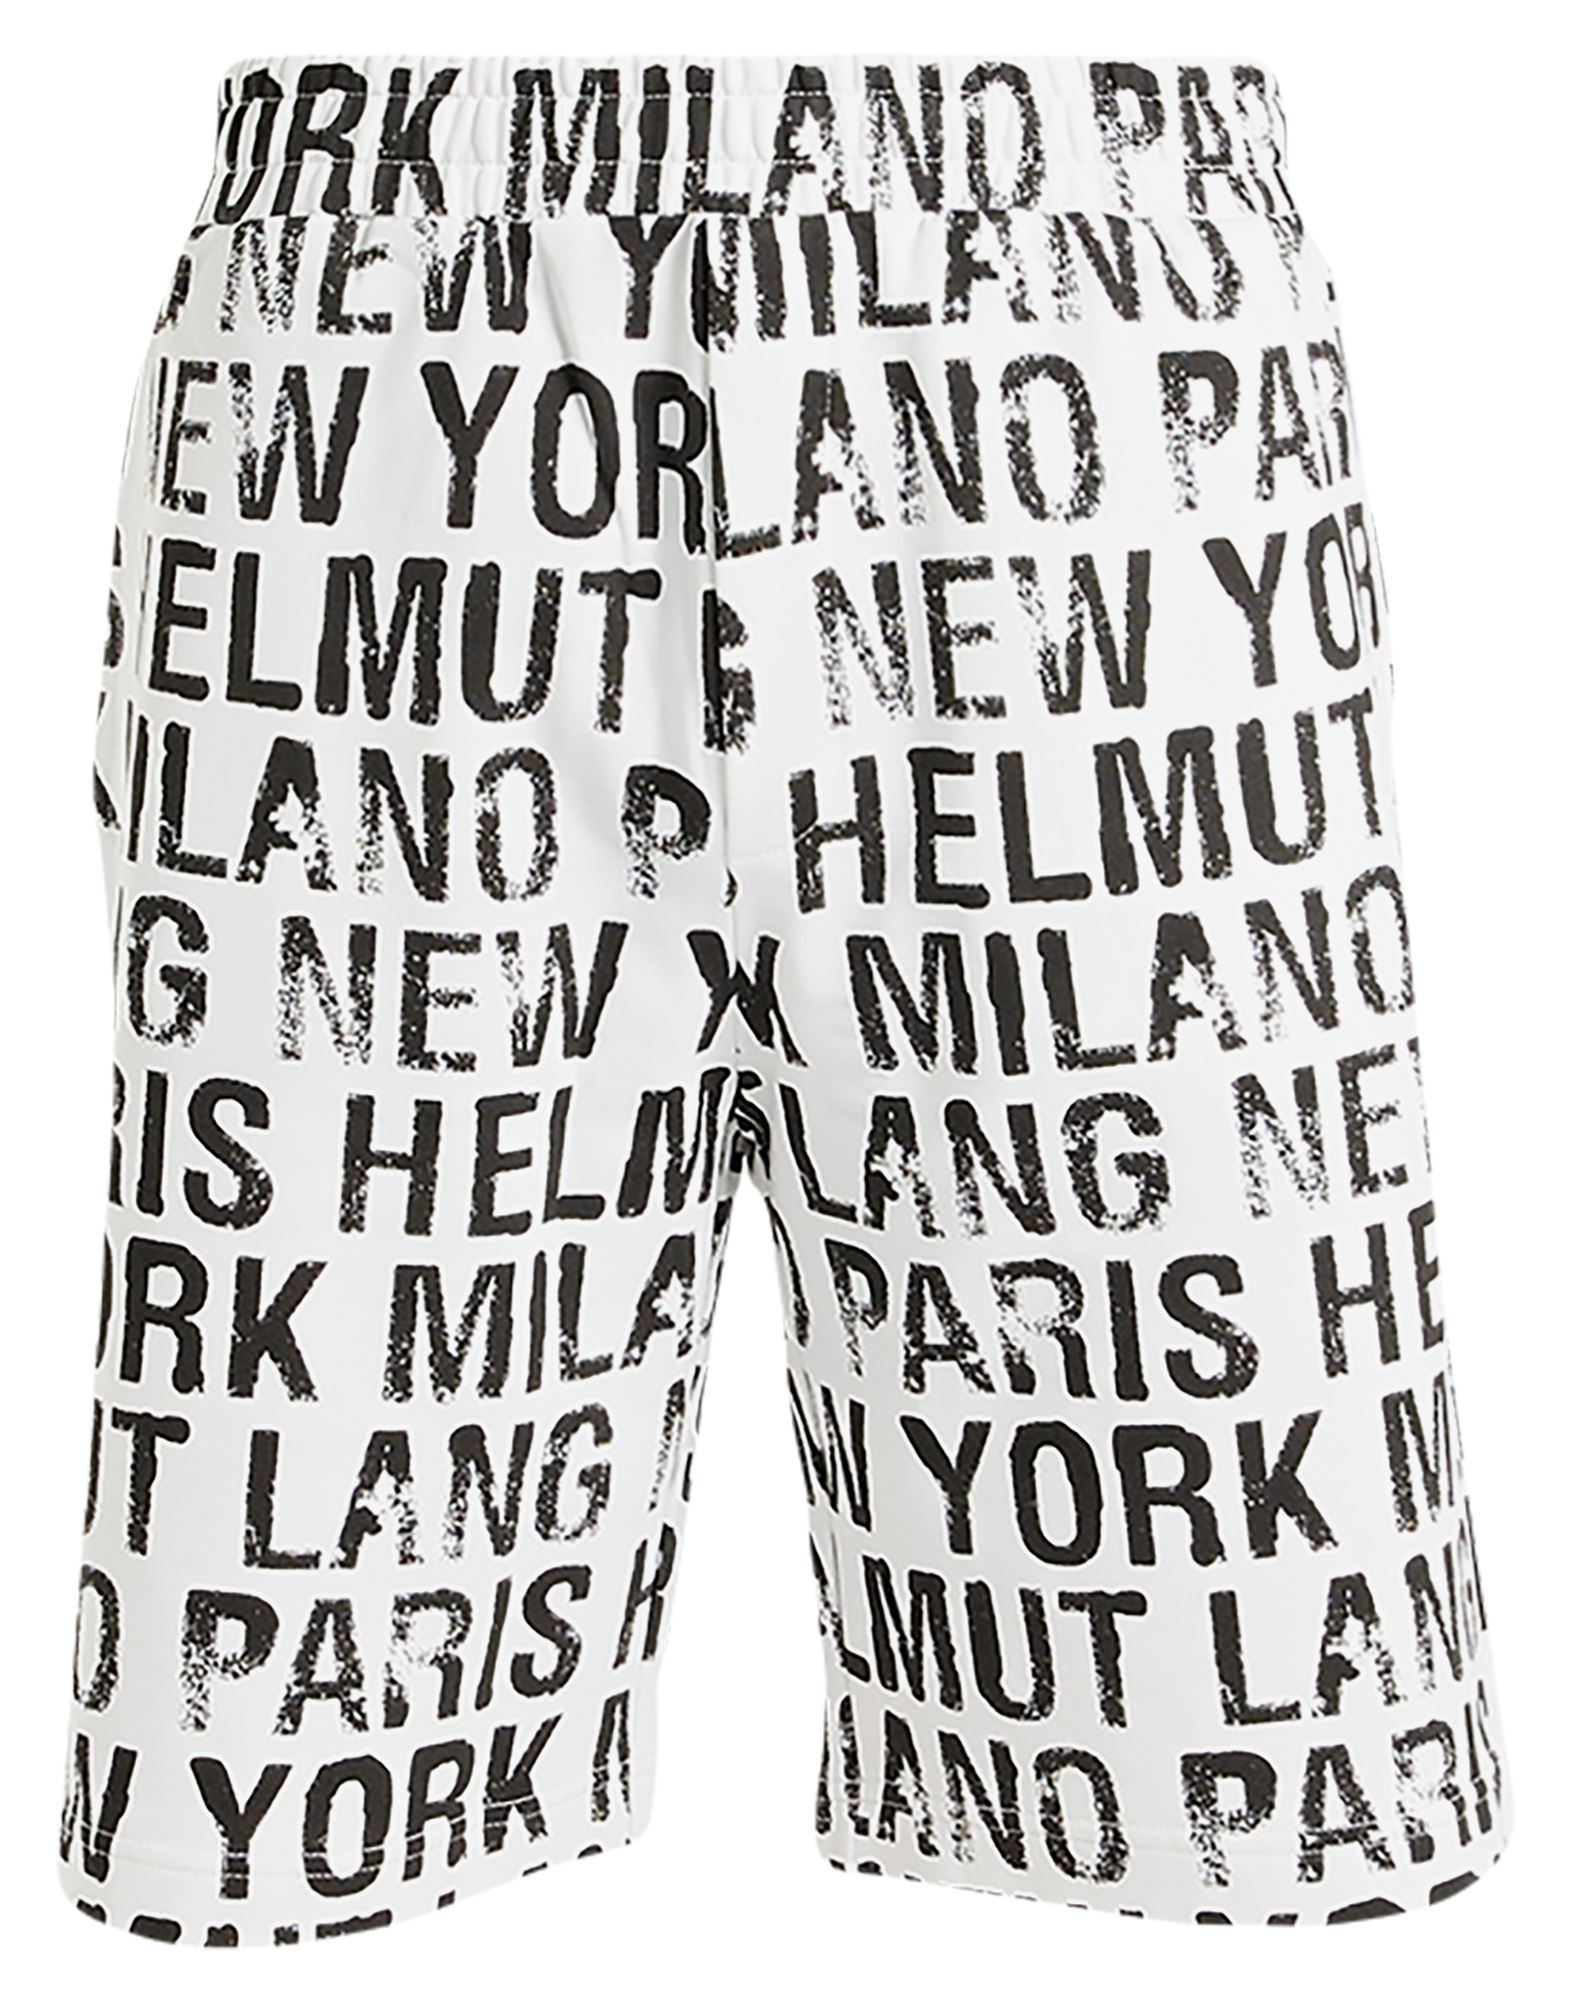 Helmut Lang Man Shorts & Bermuda Shorts White Size M Cotton